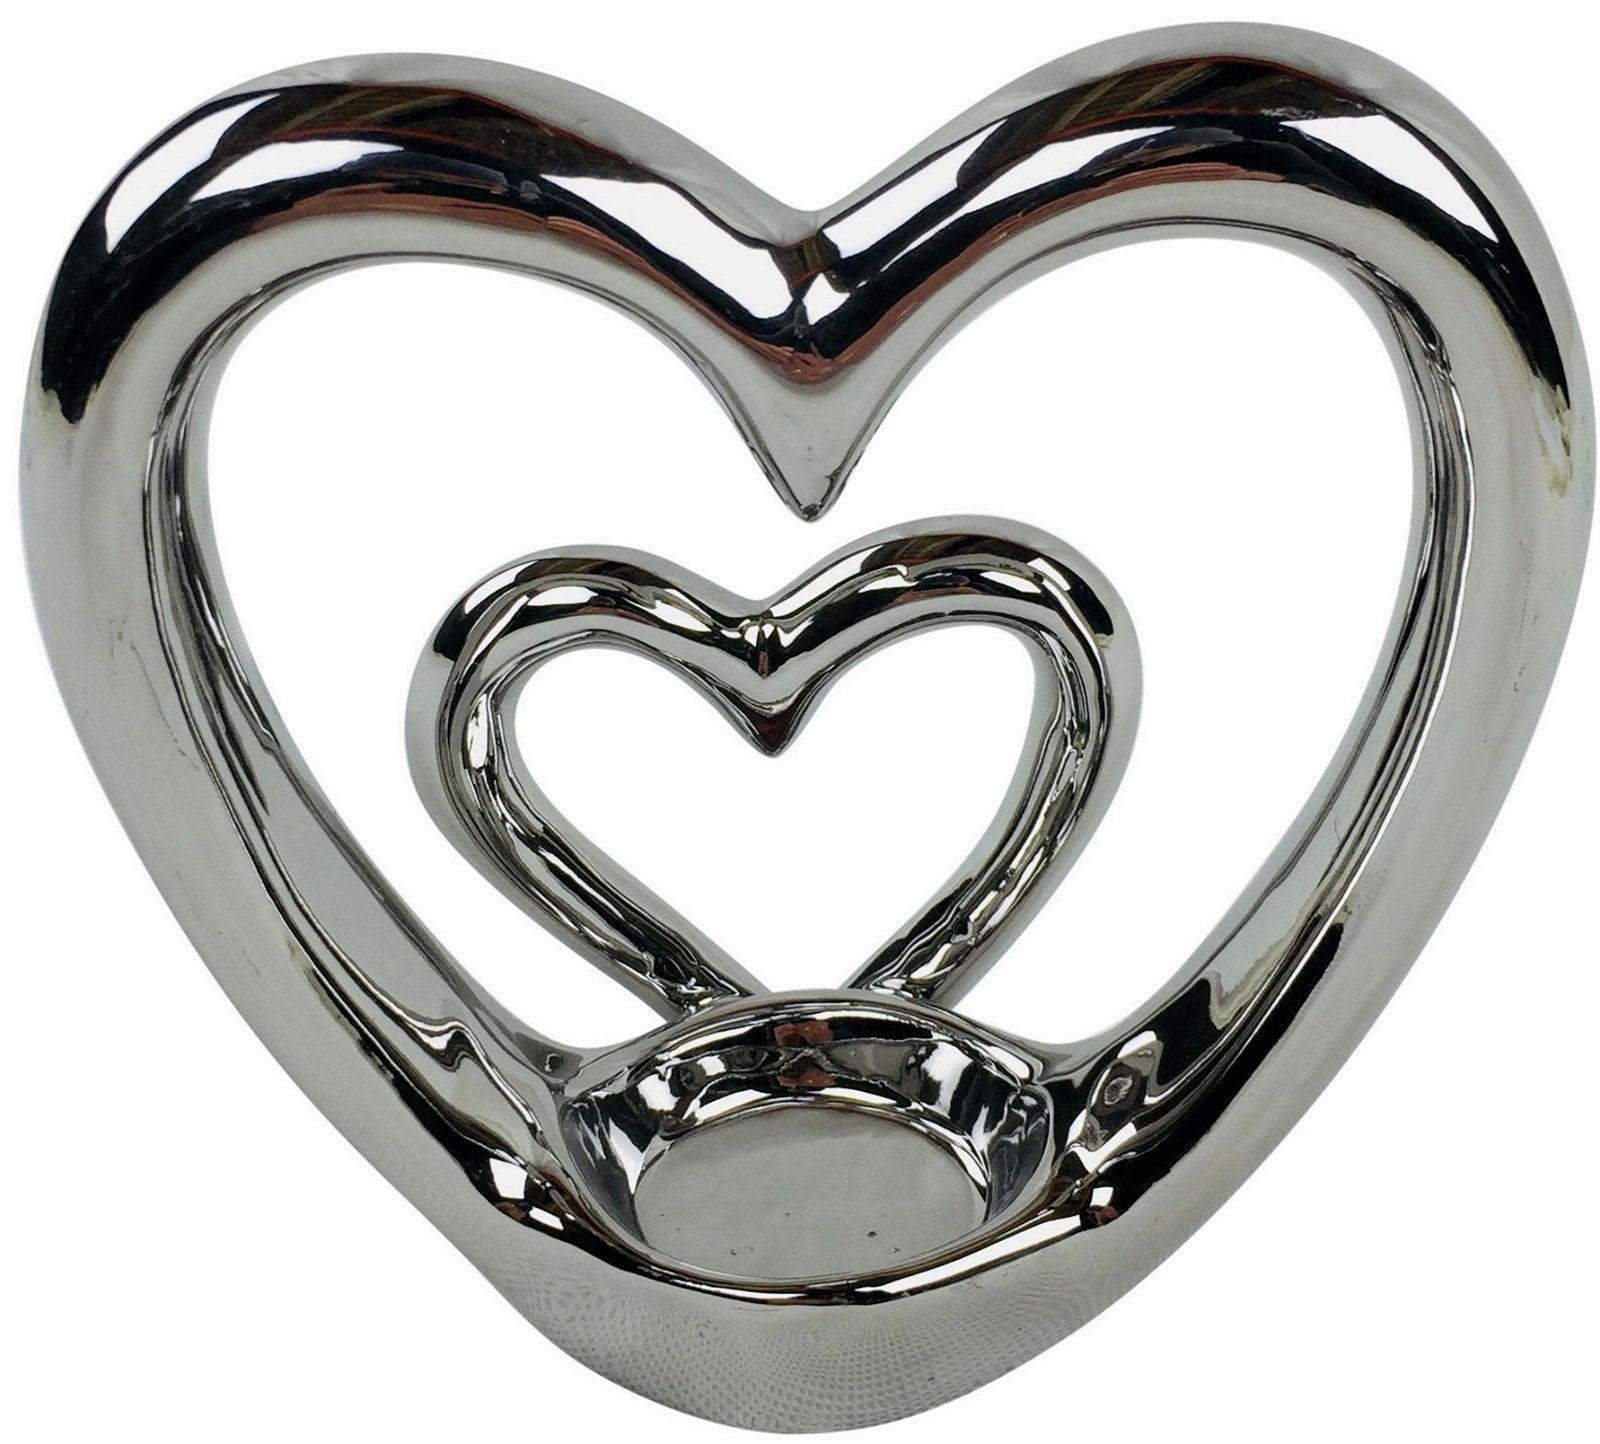 Silver Double Heart Tealight Holder - £18.99 - Tealight Holders 